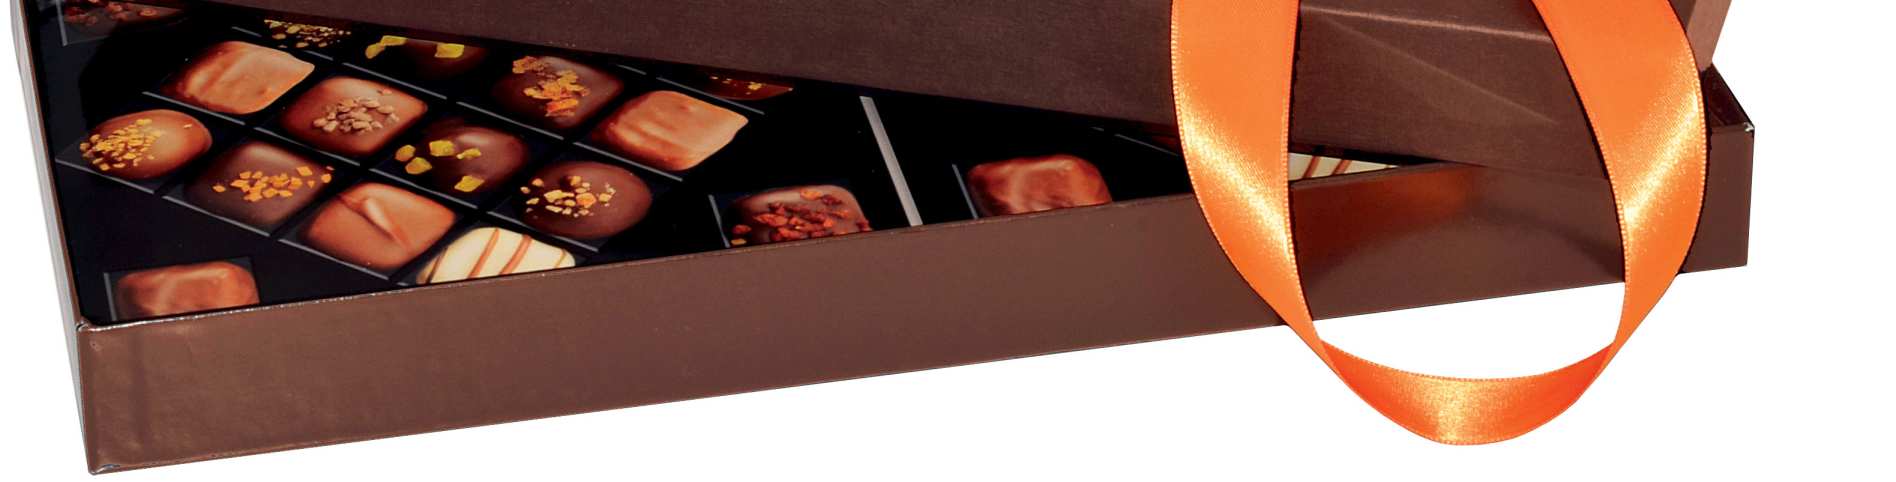 Escargots-Boîtes & Ballotins-Chocolat Daniel Stoffel : maître chocolatier  en Alsace depuis 1963